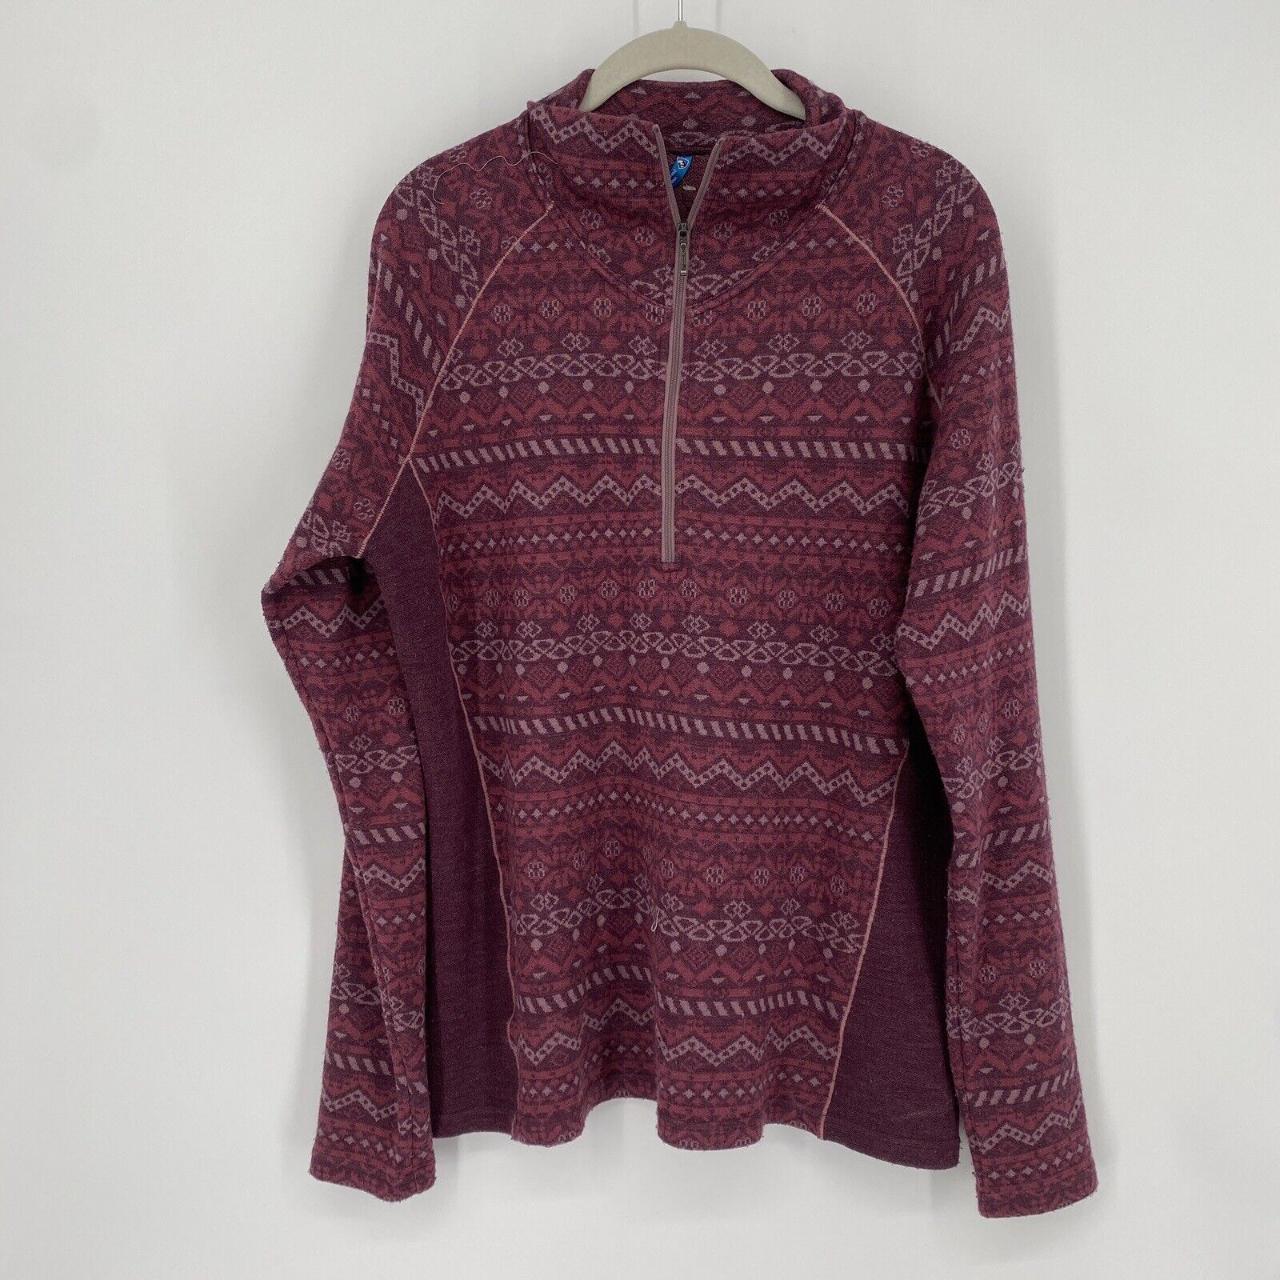 Kuhl Sweater Women’s XL maroon wool blend quarter